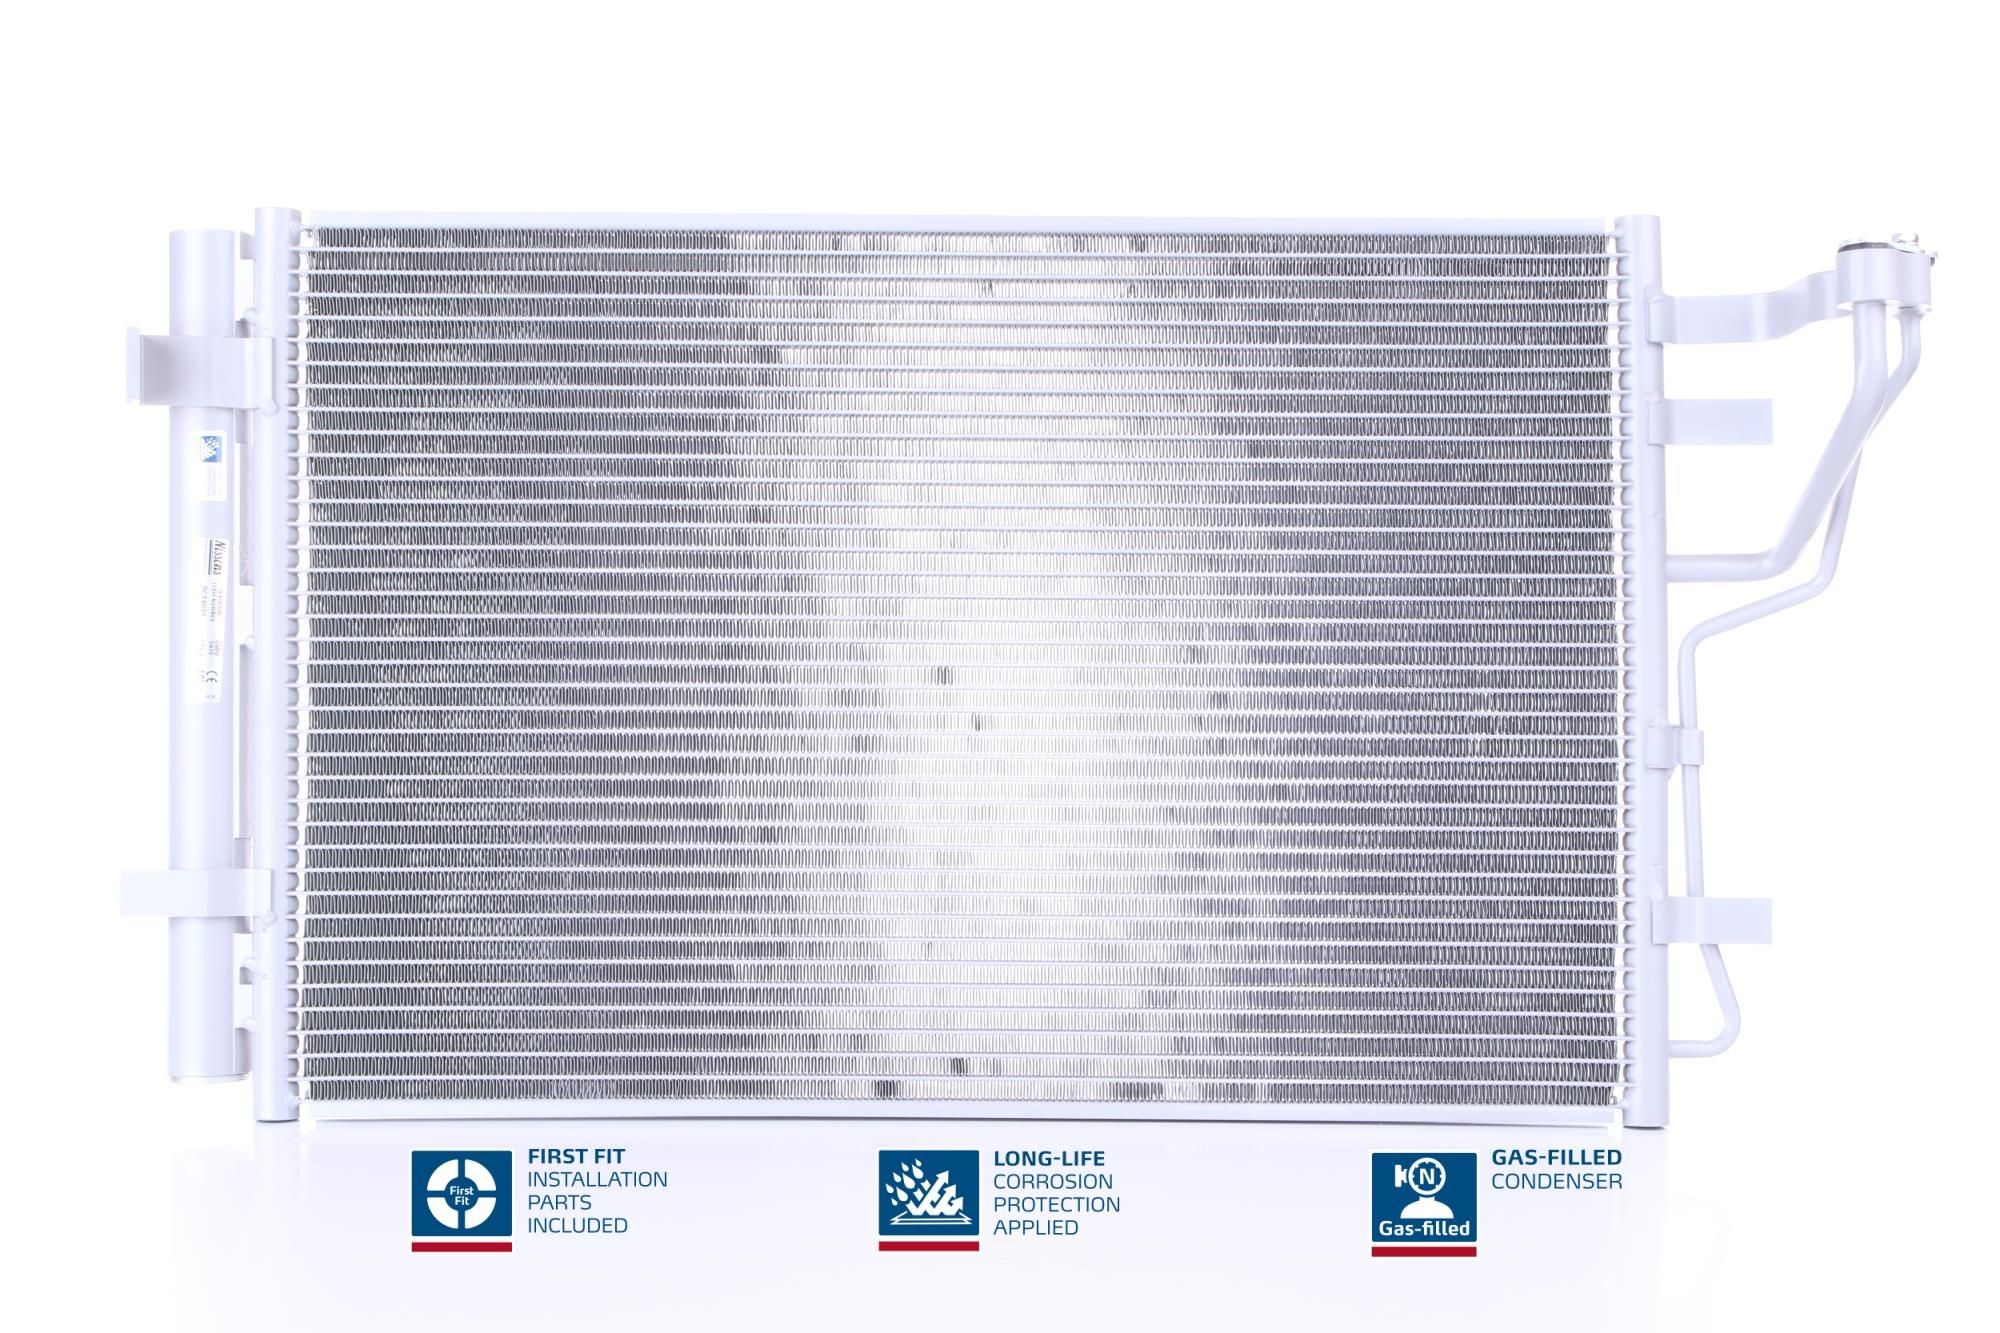 NISSENS 940006 Air conditioning condenser with dryer, Aluminium, 610mm, R 134a, R 1234yf